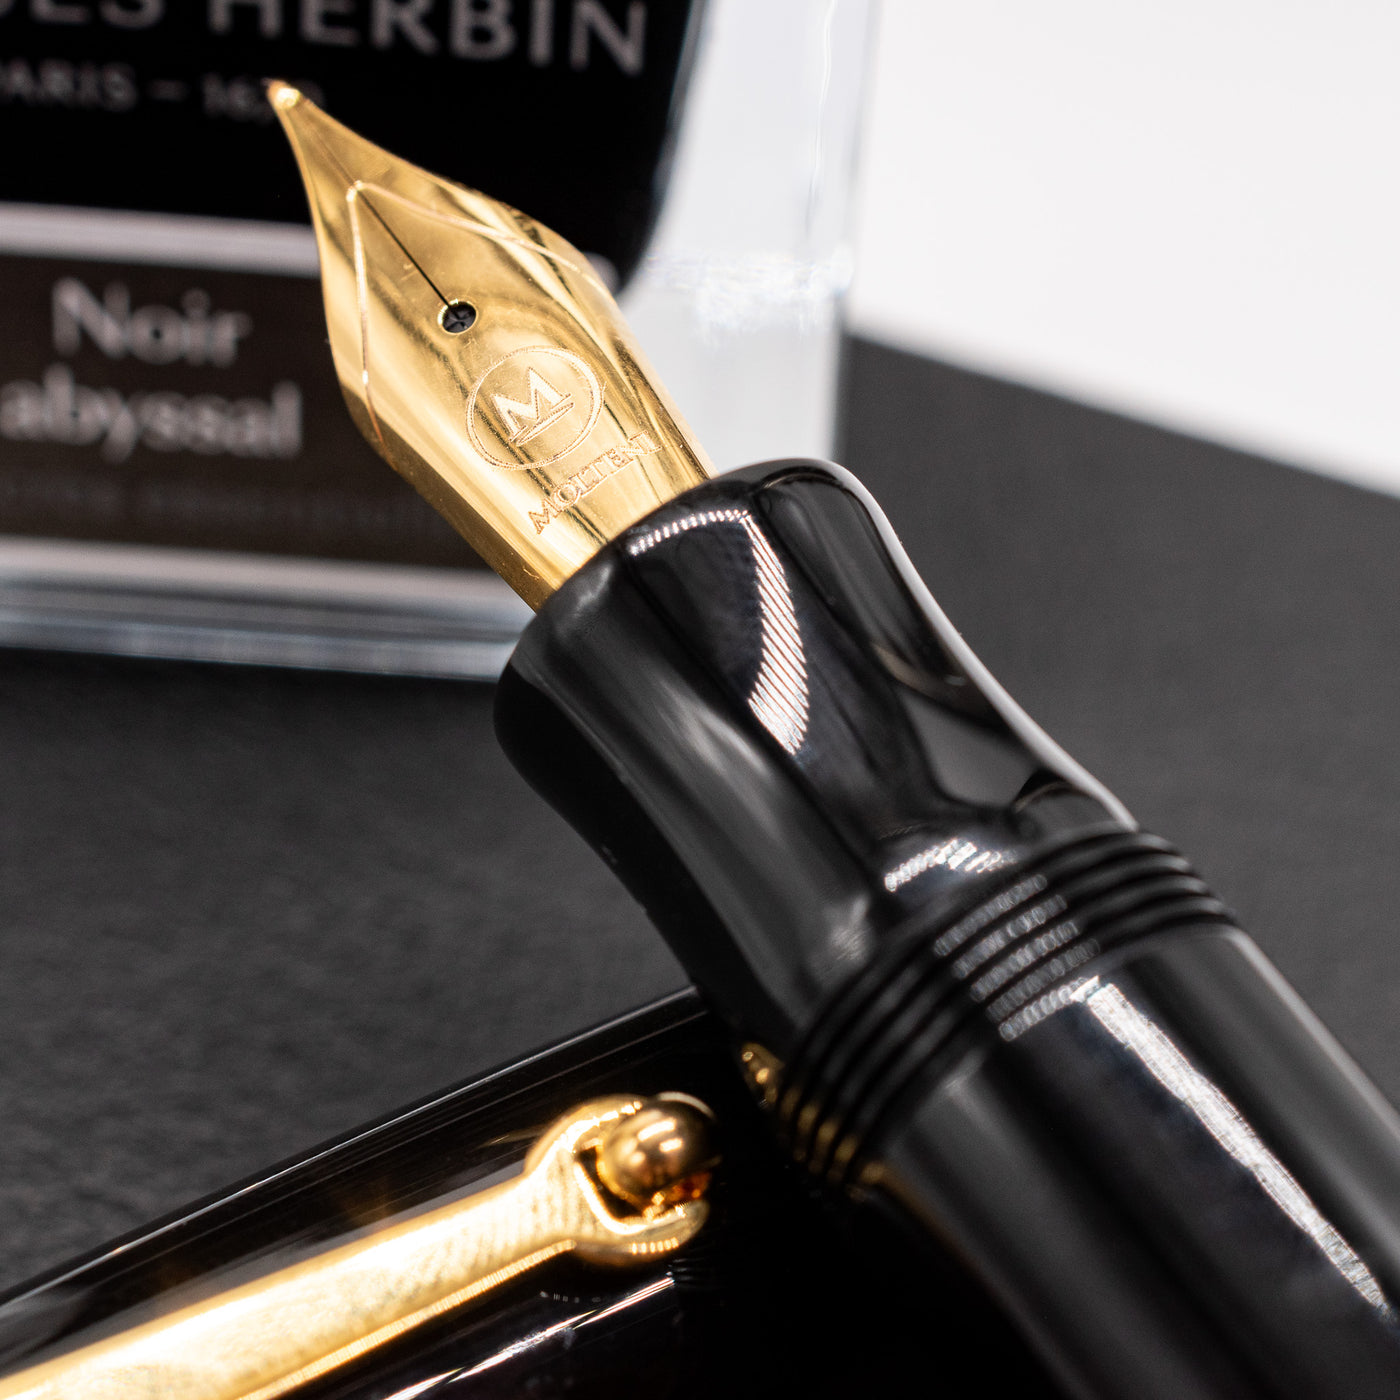 Molteni Modelo 54 Fountain Pen - Jet Black & Gold stainless steel nib